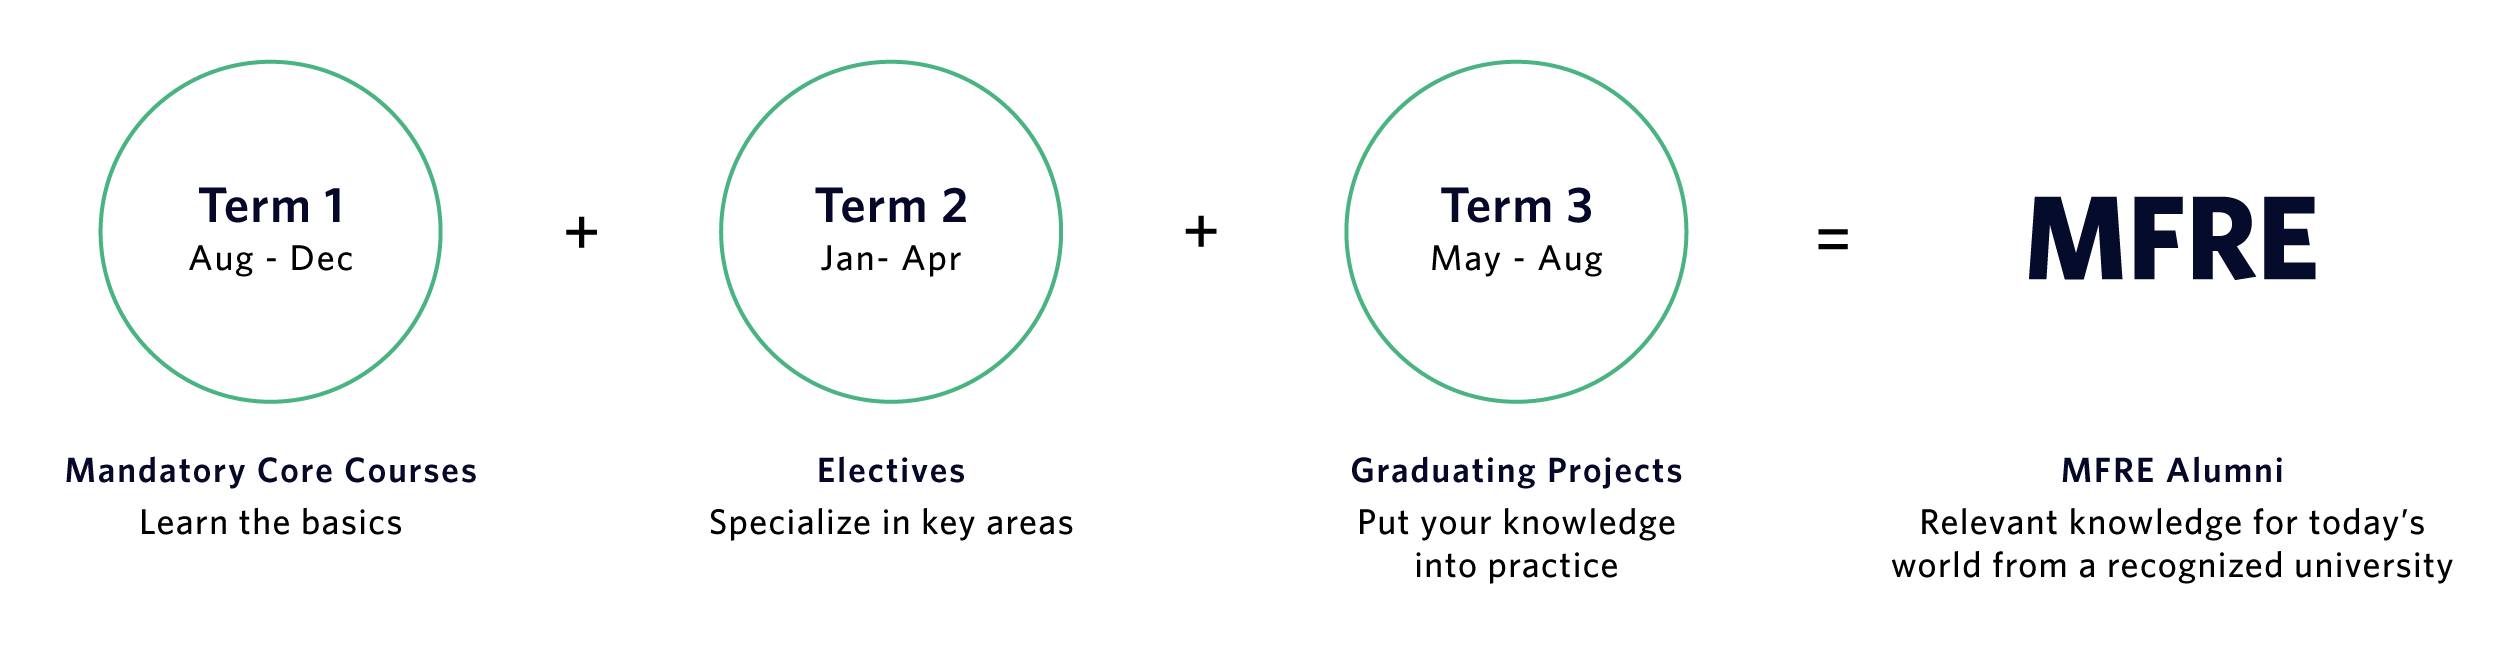 MFRE Masters Degree Program Overview Diagram horizontal